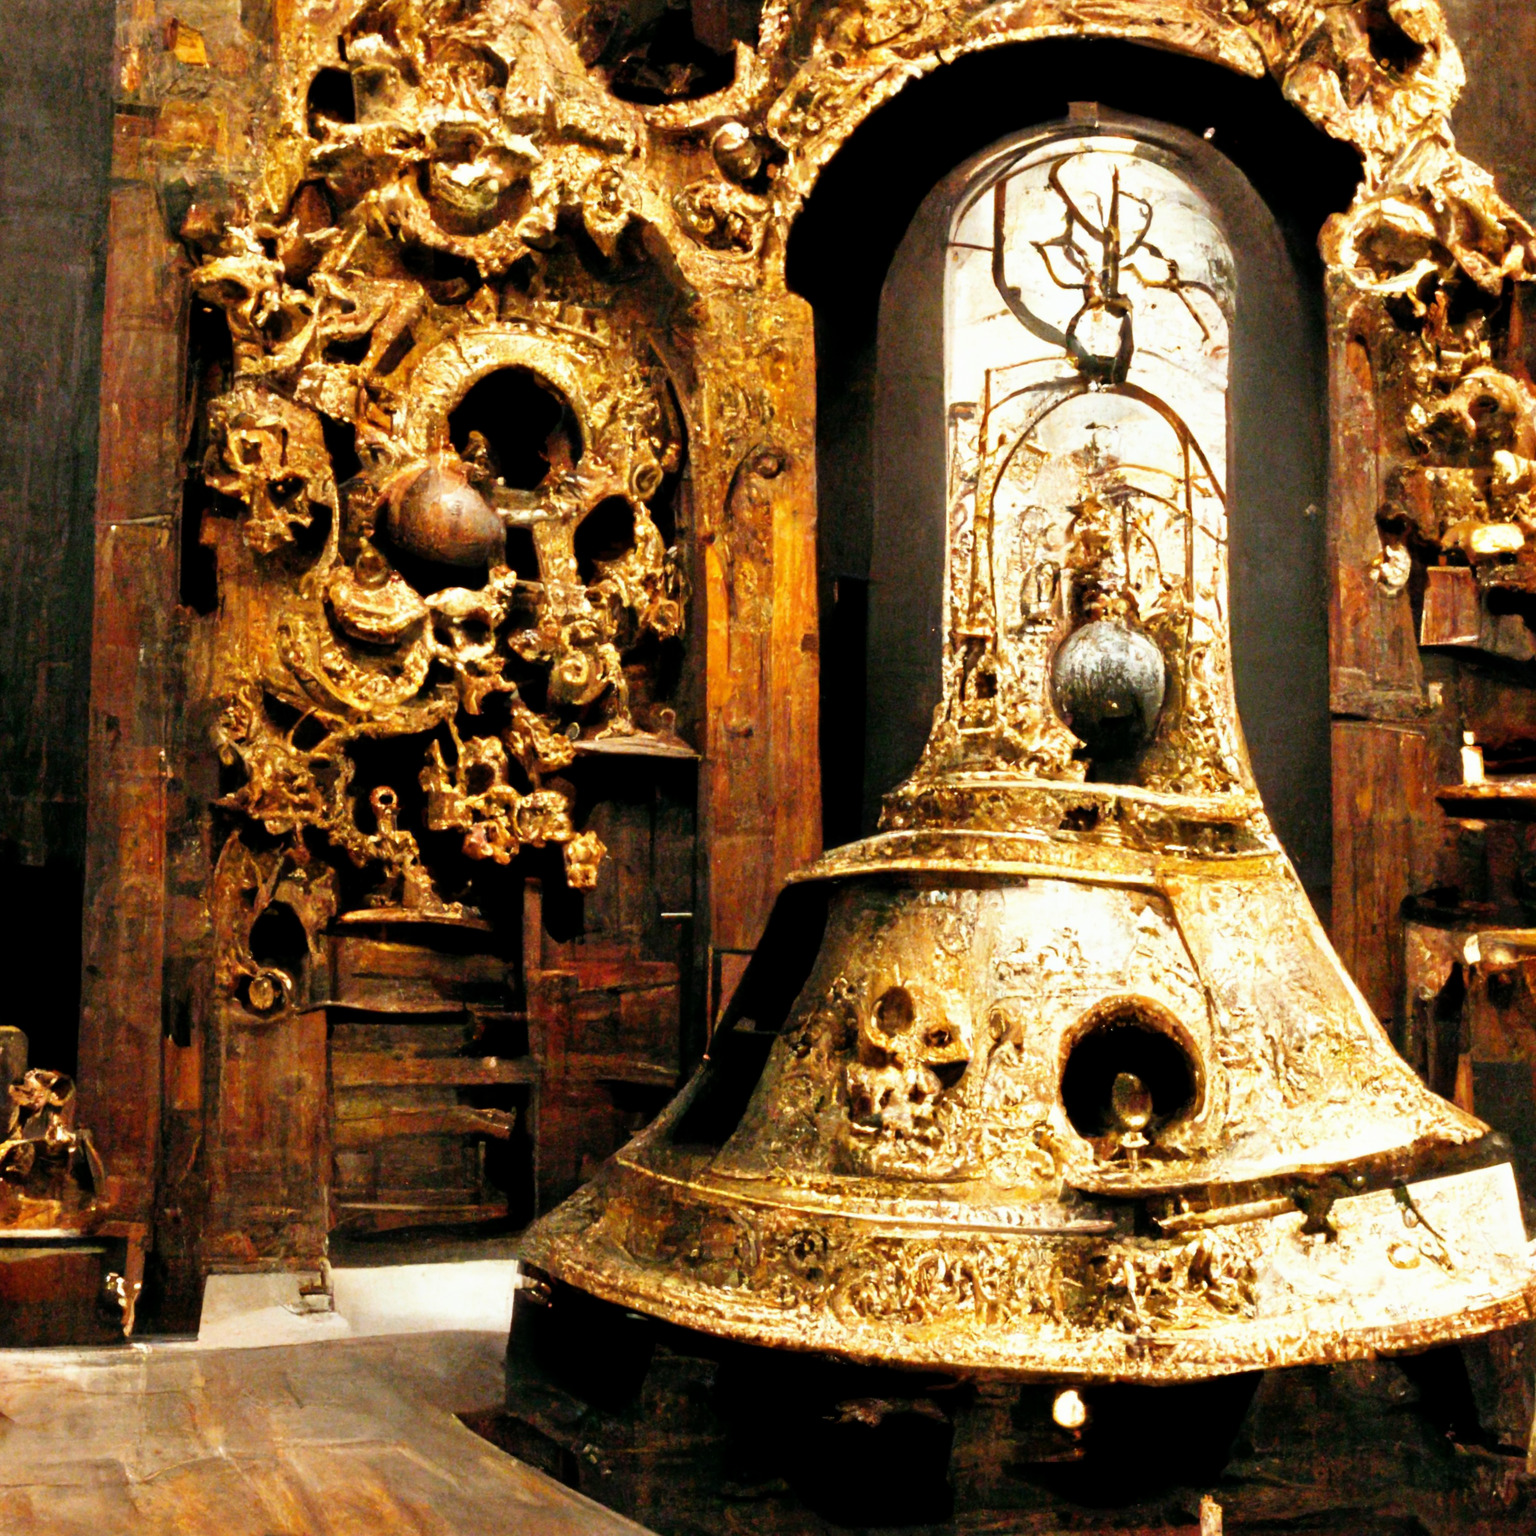 stephentalla 17th century Spanish church bell 8b48ddc3 d027 4f6e 895d 4275ce2f0e0f BELLS OF SPAIN